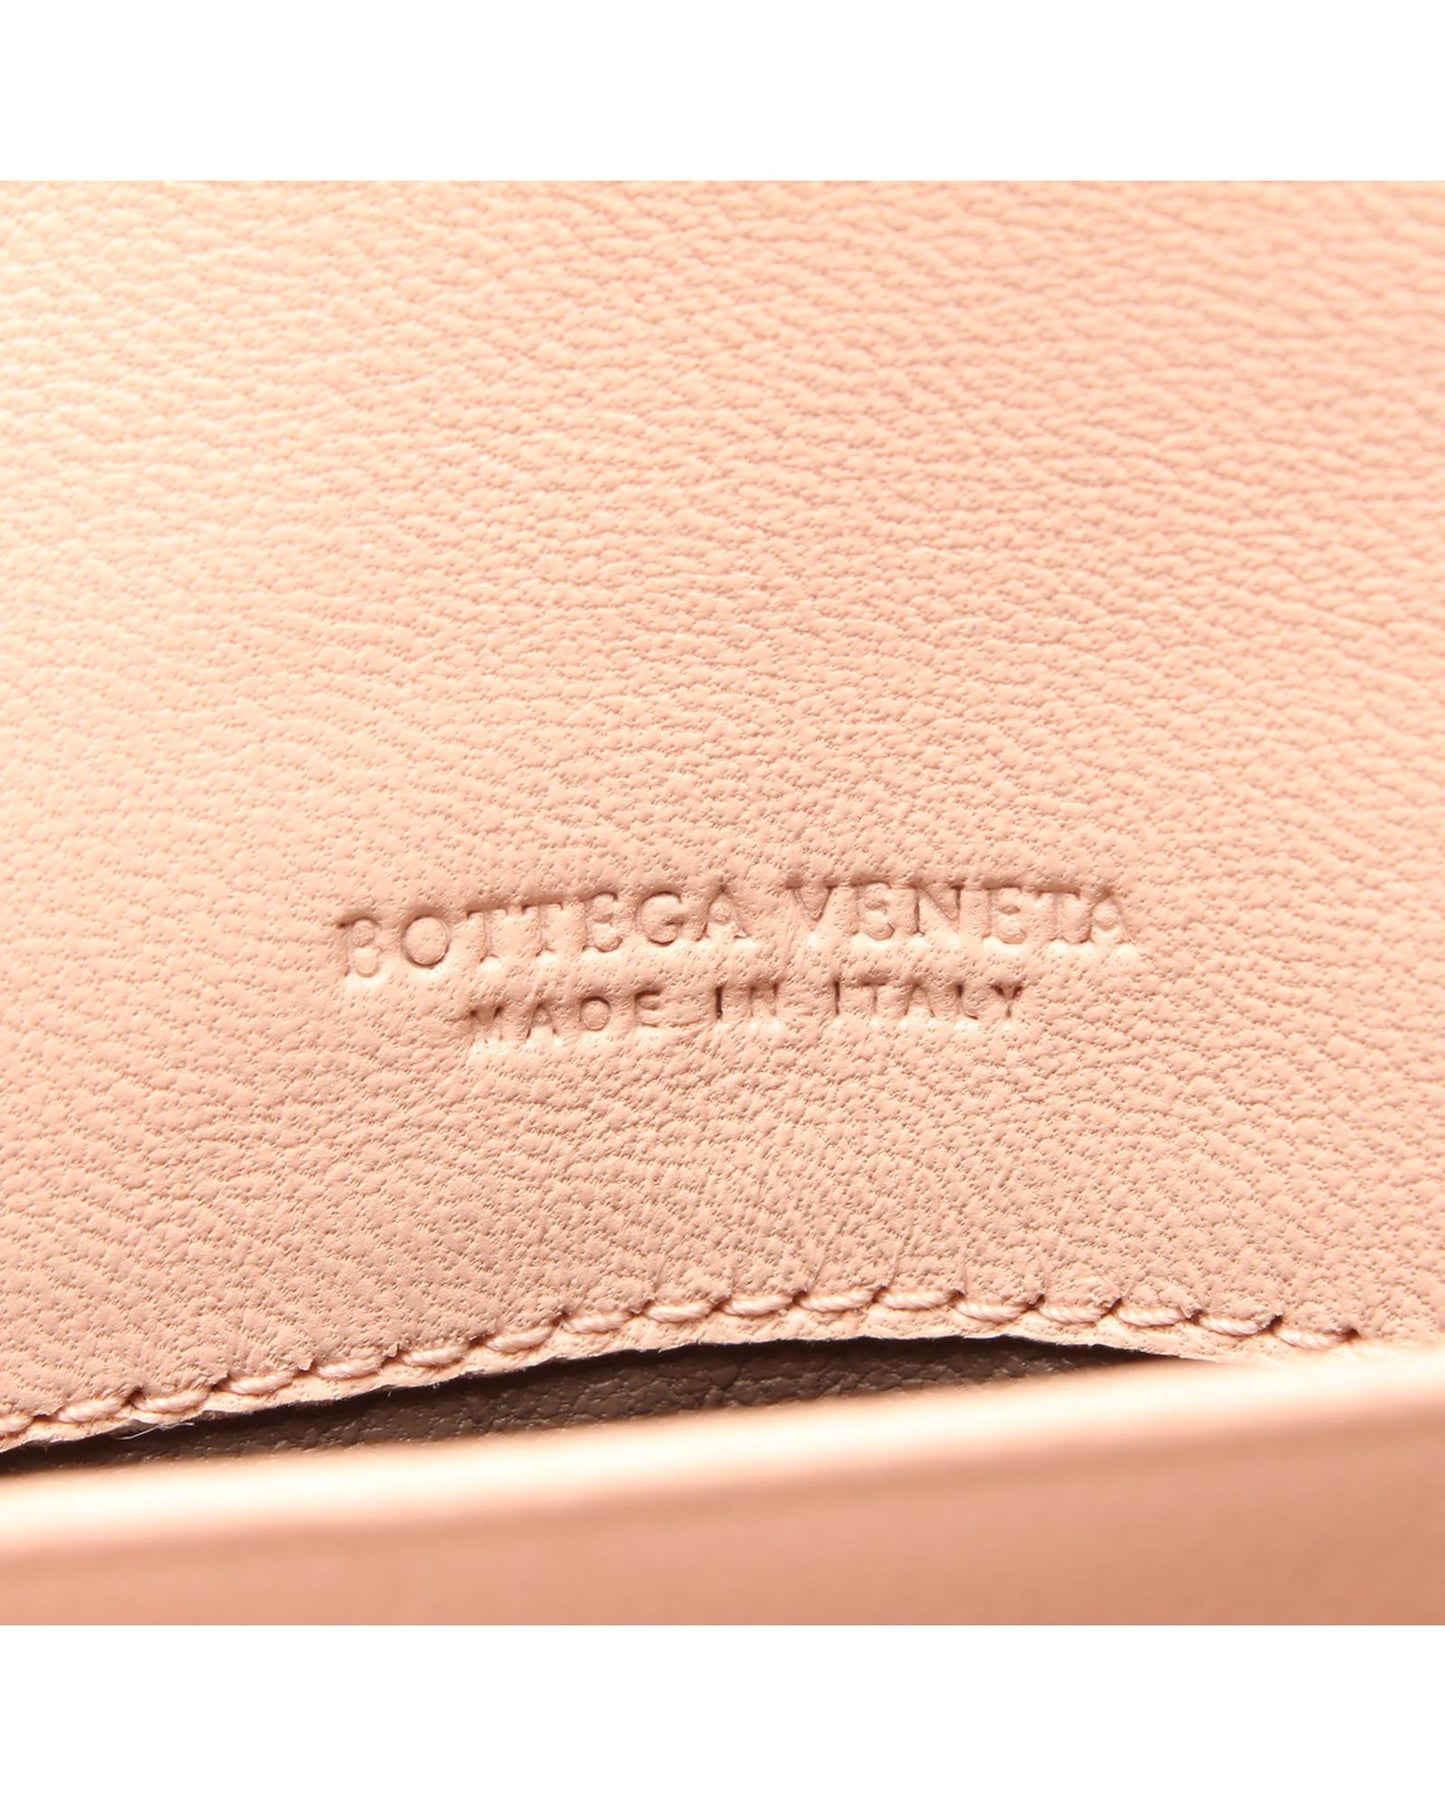 Bottega Veneta Women's Multicolor Leather Intrecciato Flap Wallet in Multicolor